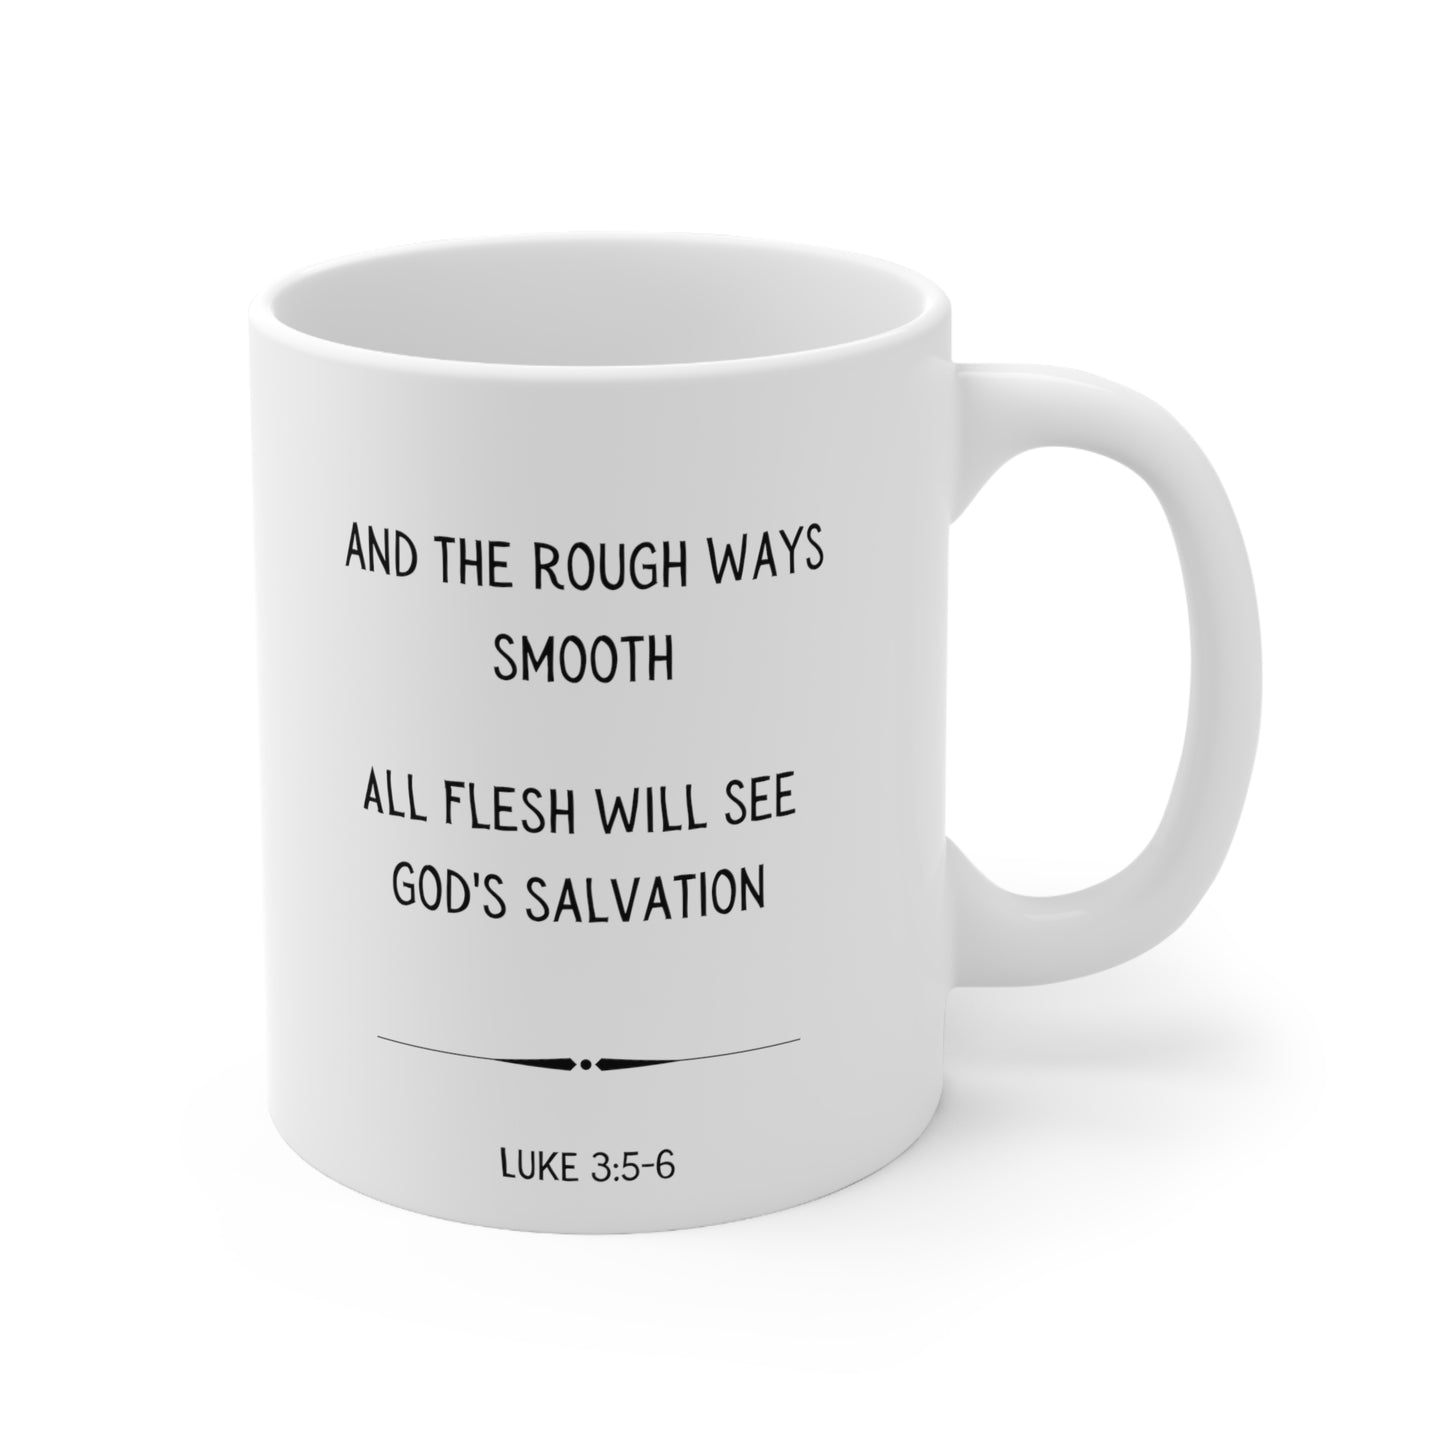 Scripture Mug, Every Valley Will Be Raised Up, Luke 3:5-6